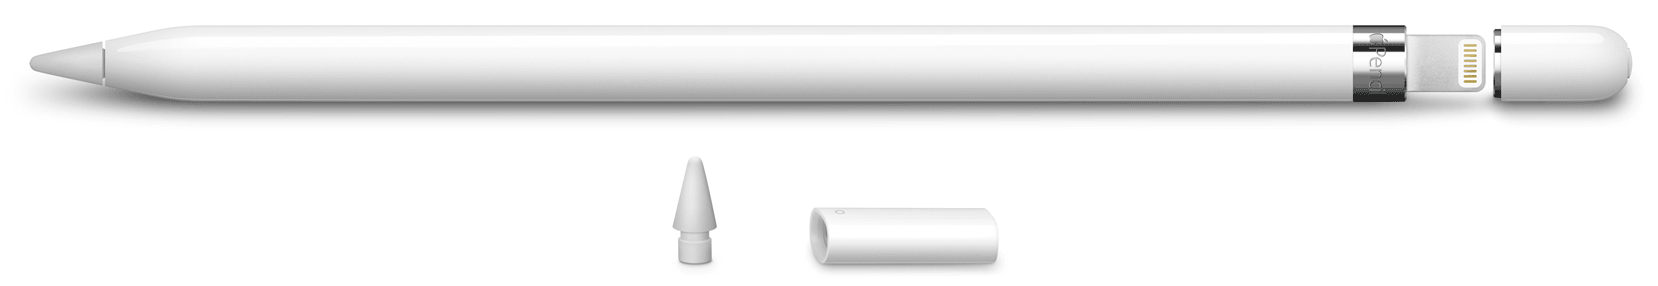 Apple Pencil (1st Generation) - Grab Your Gadget